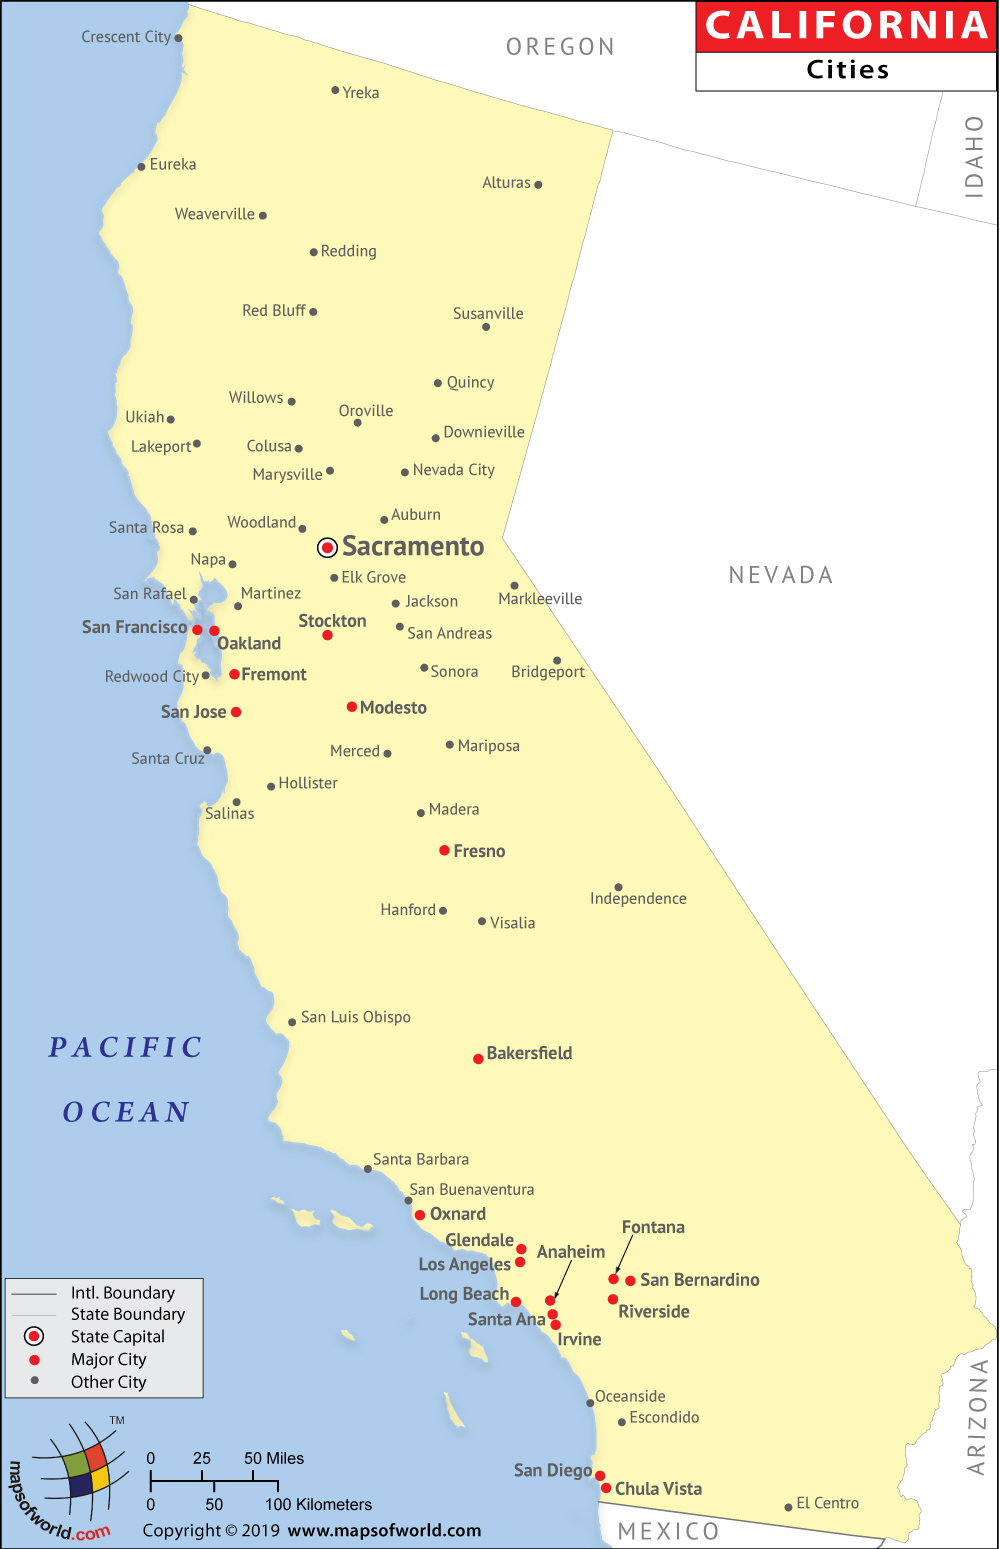 alphabetical-list-of-cities-in-california-listcrab